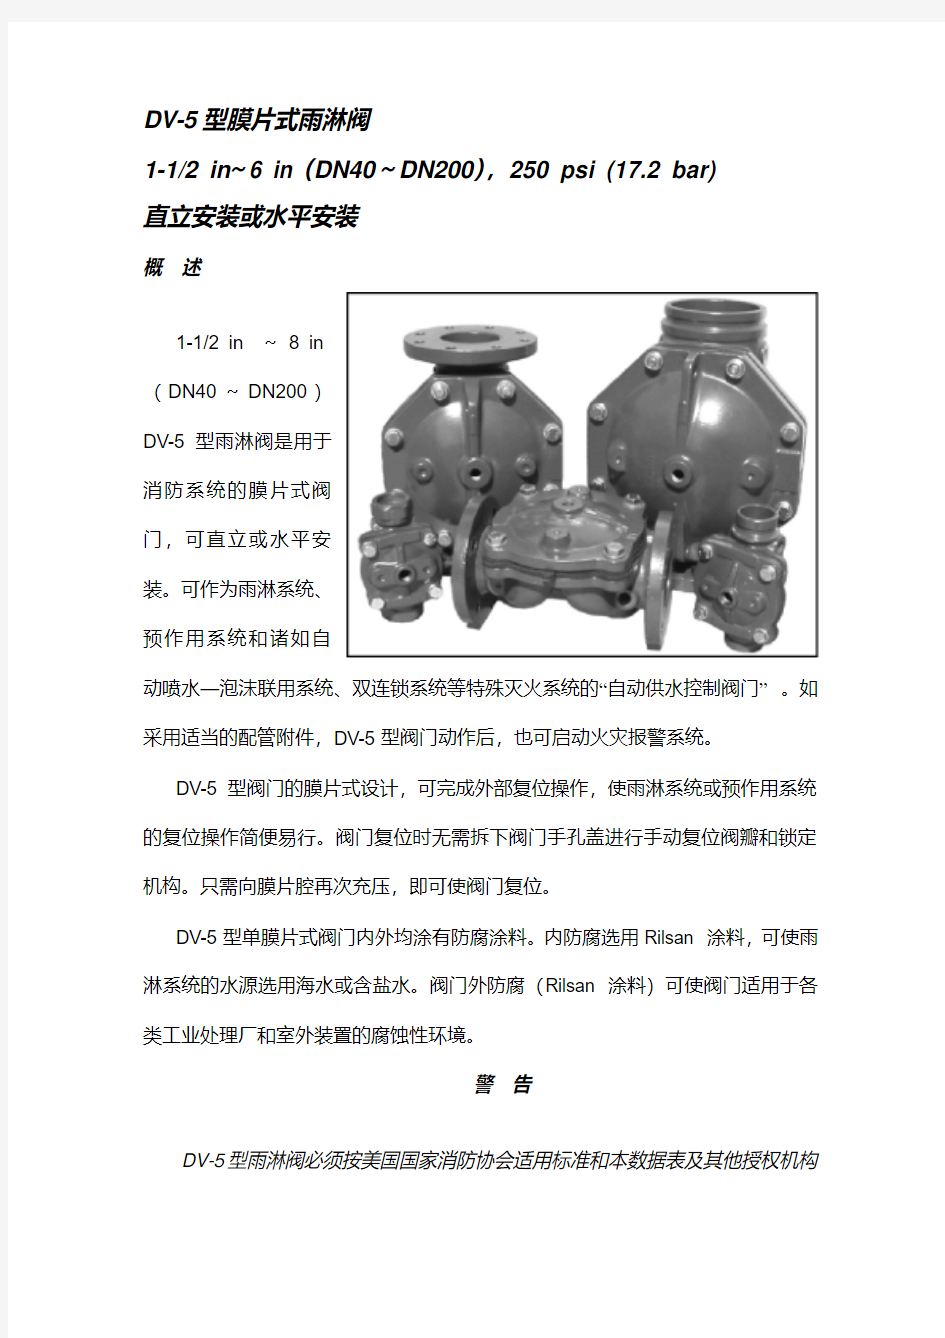 DV-5雨淋阀中文说明